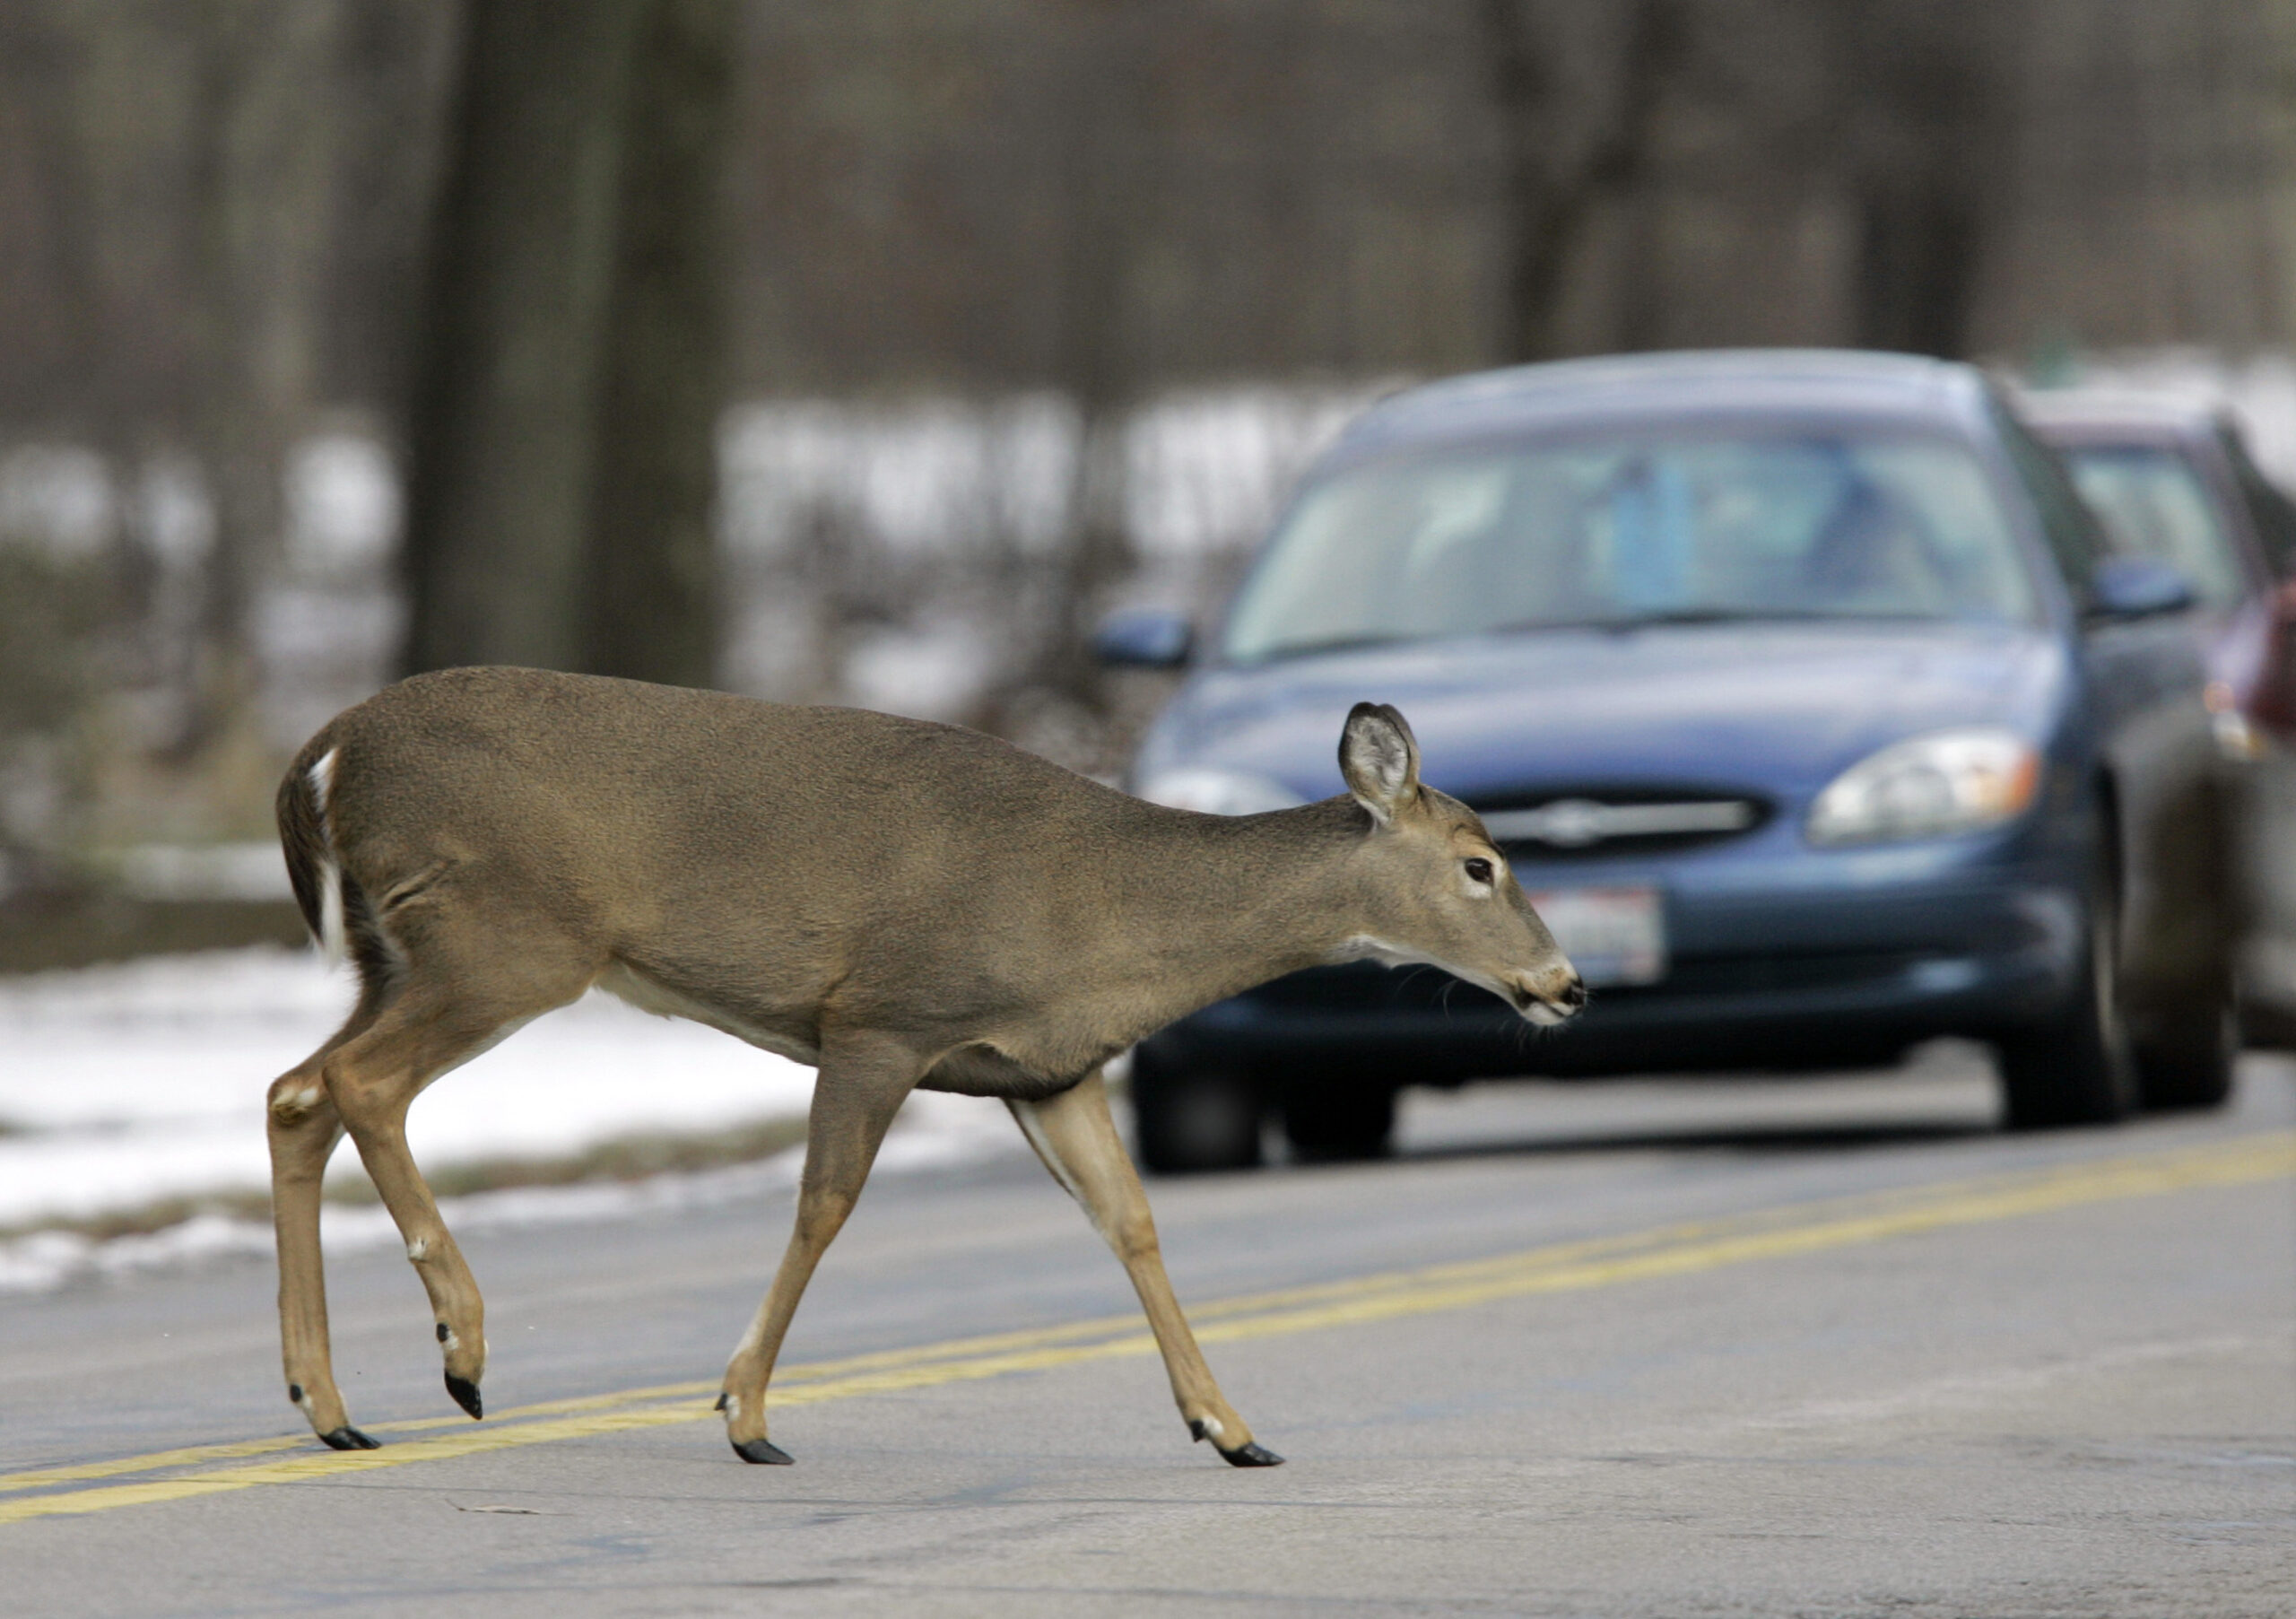 Deer, deer crashes, accidents, collisions, transportation